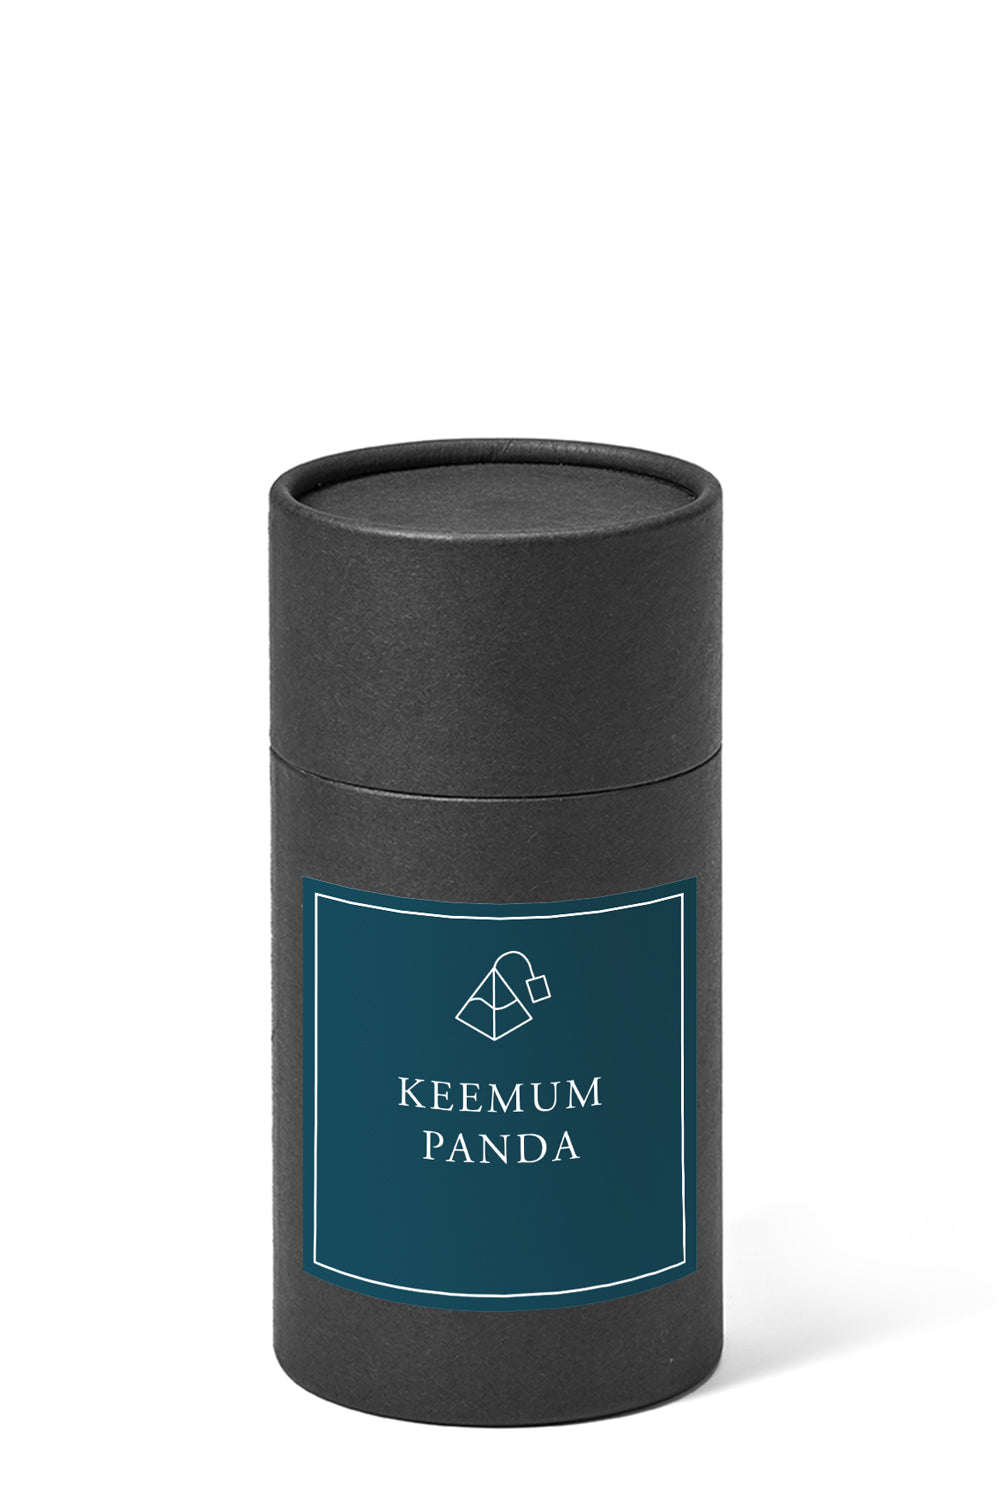 Keemun Panda (pyramid bags)-15 pyramids gift-Loose Leaf Tea-High Teas